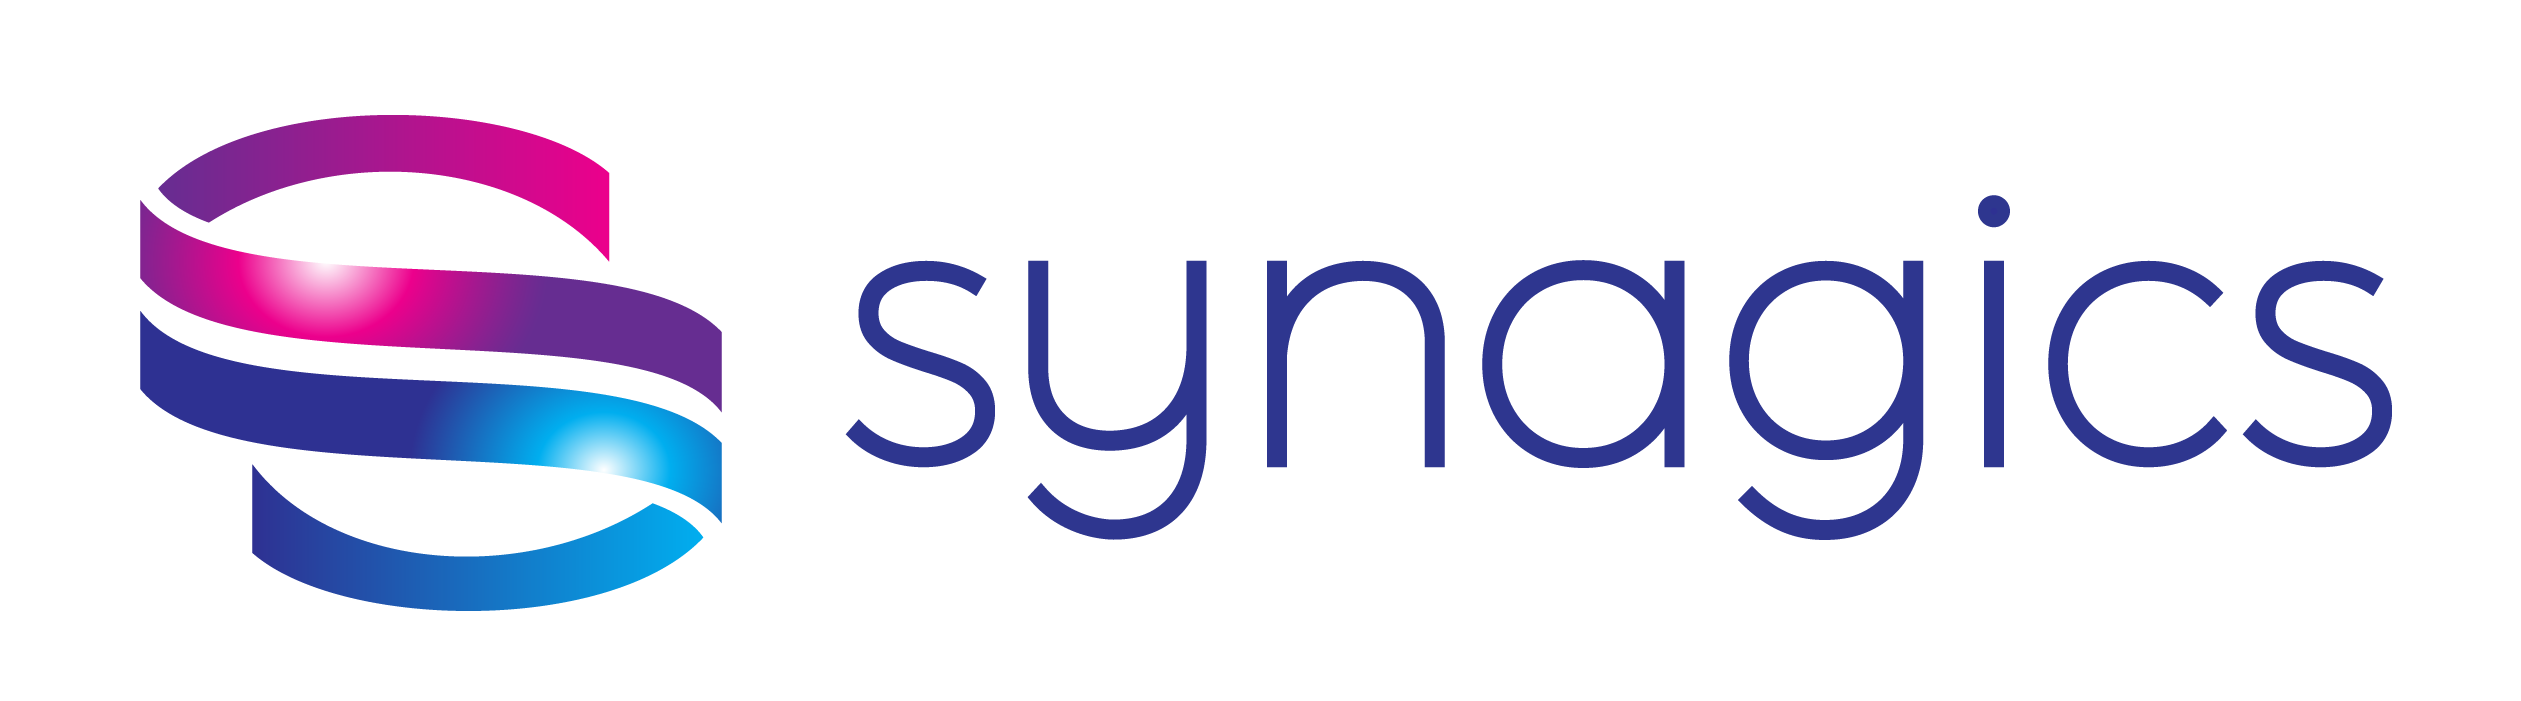 synagics logo